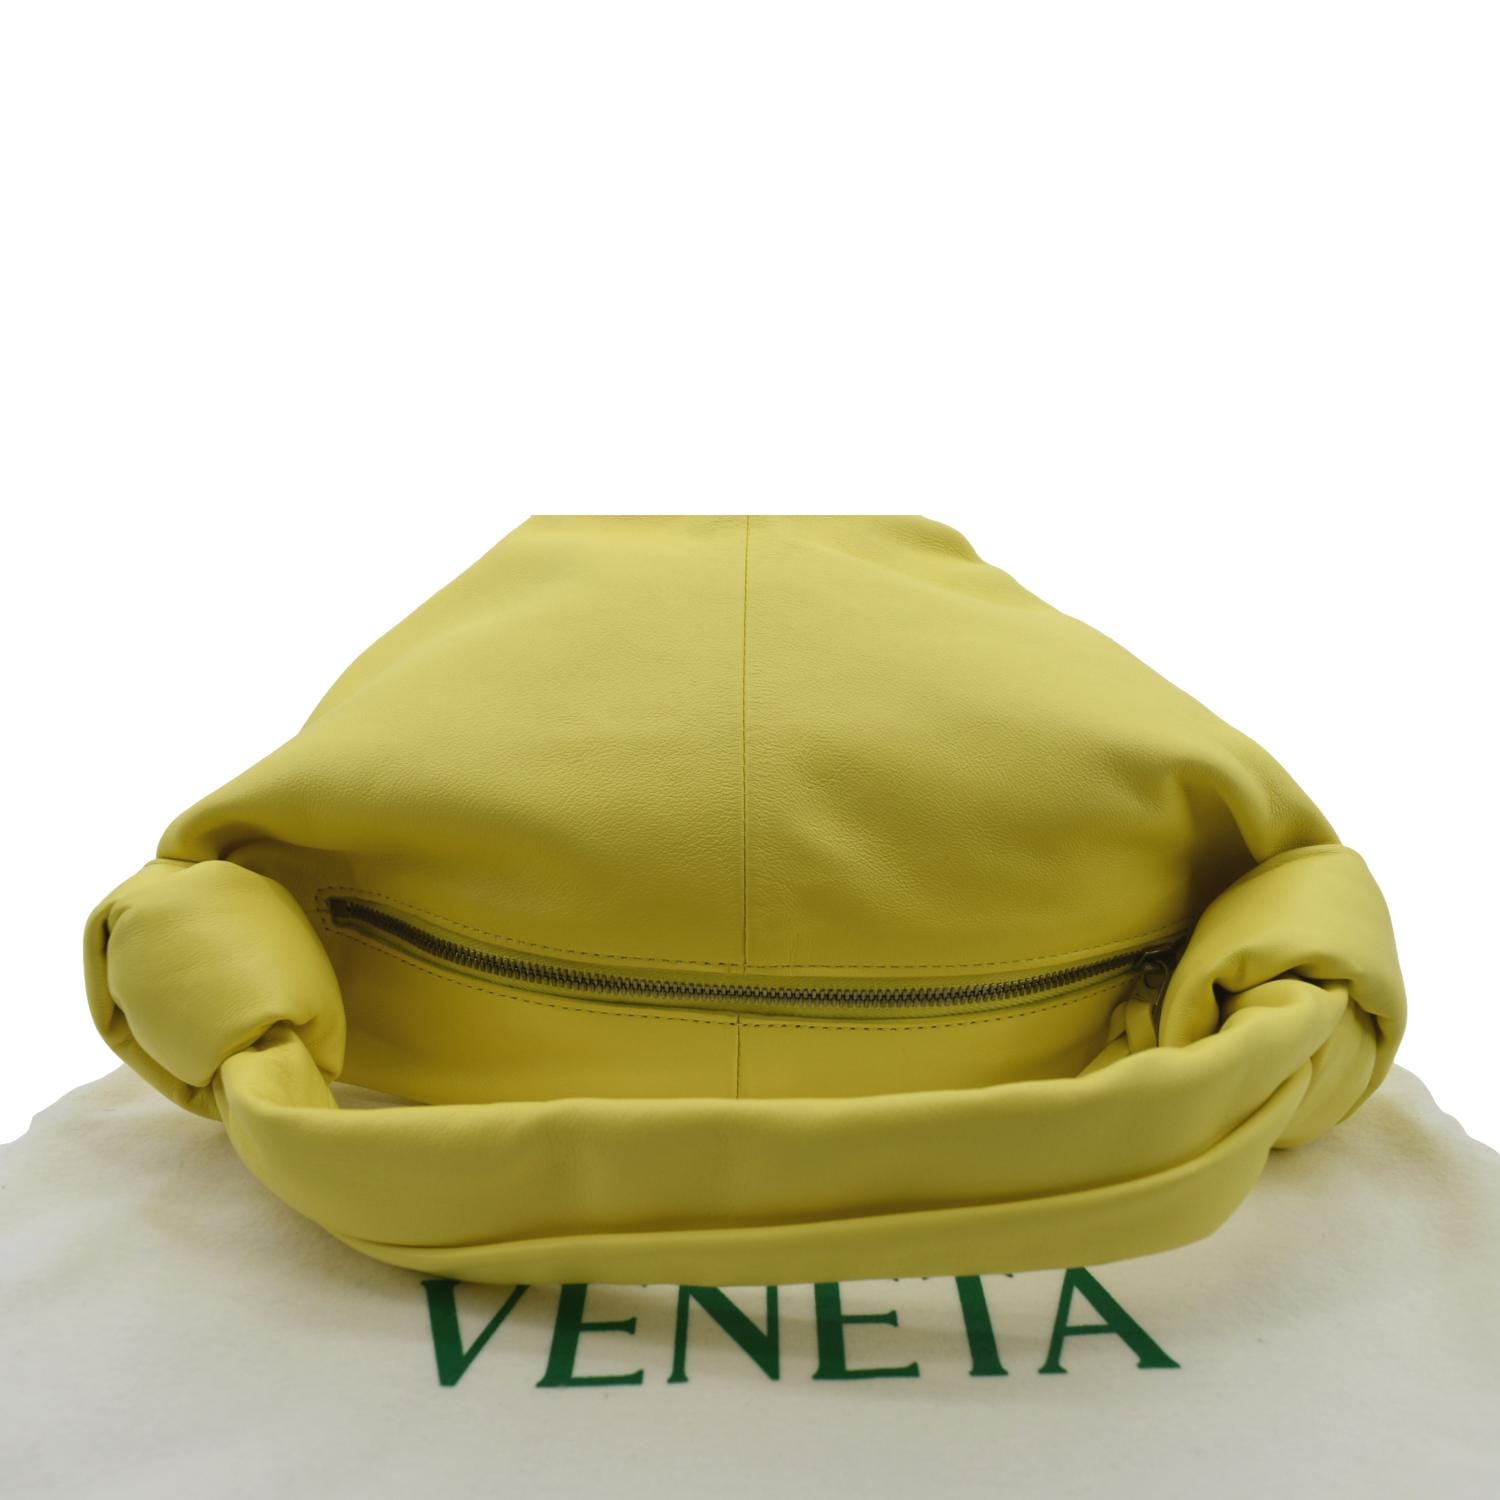 Bottega Veneta Double Knot Bag in Tangerine & Gold